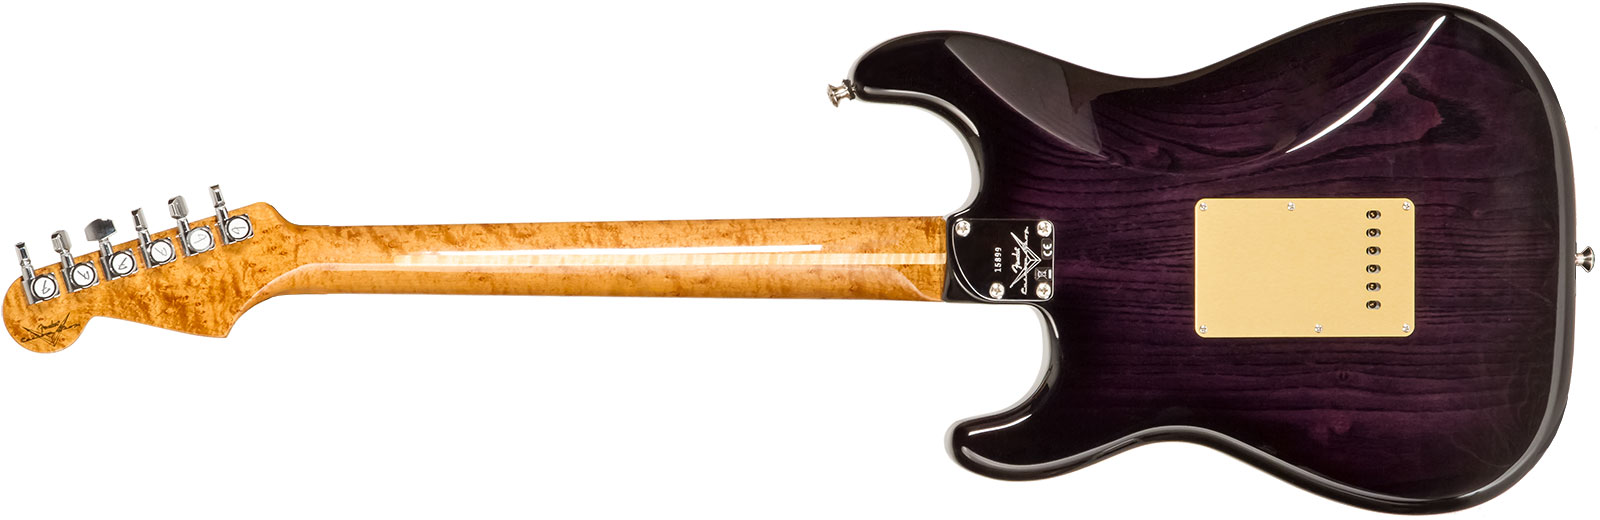 Fender Custom Shop Strat American Custom 3s Trem Mn #xn15899 - Nos Ebony Transparent - Guitarra eléctrica con forma de str. - Variation 1